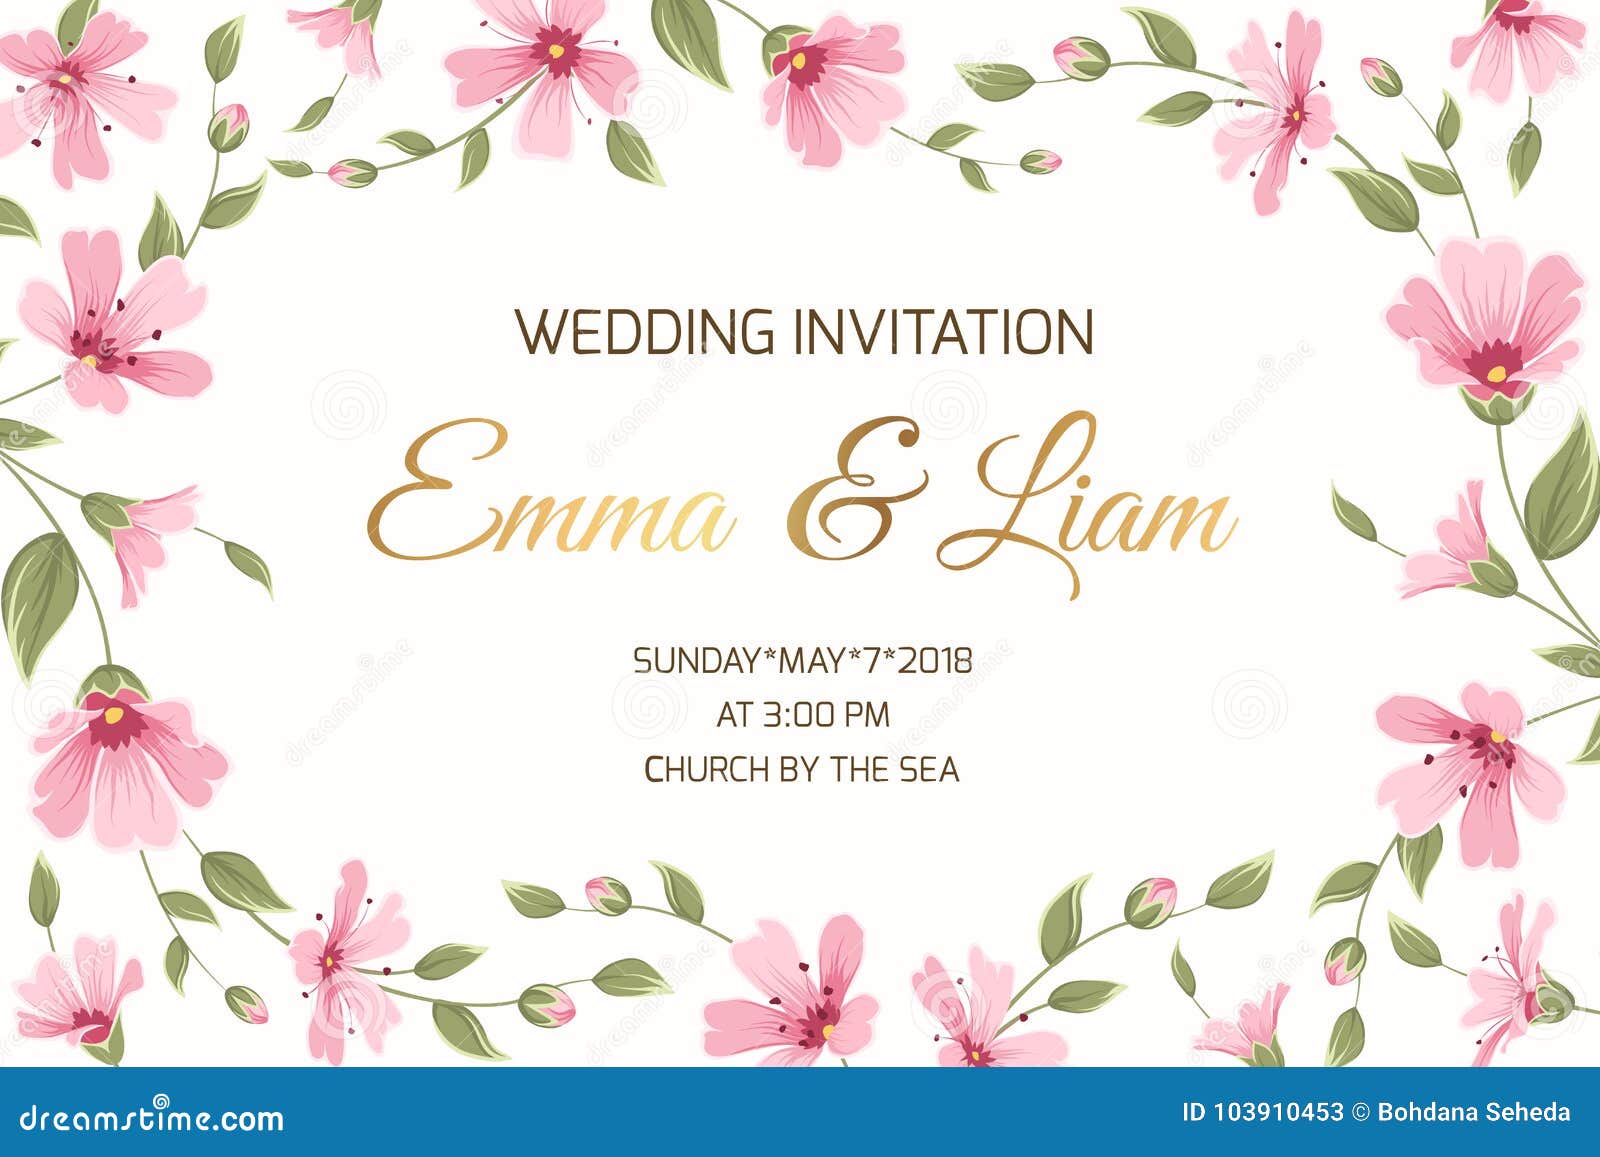 wedding invitation gypsophila flowers border frame